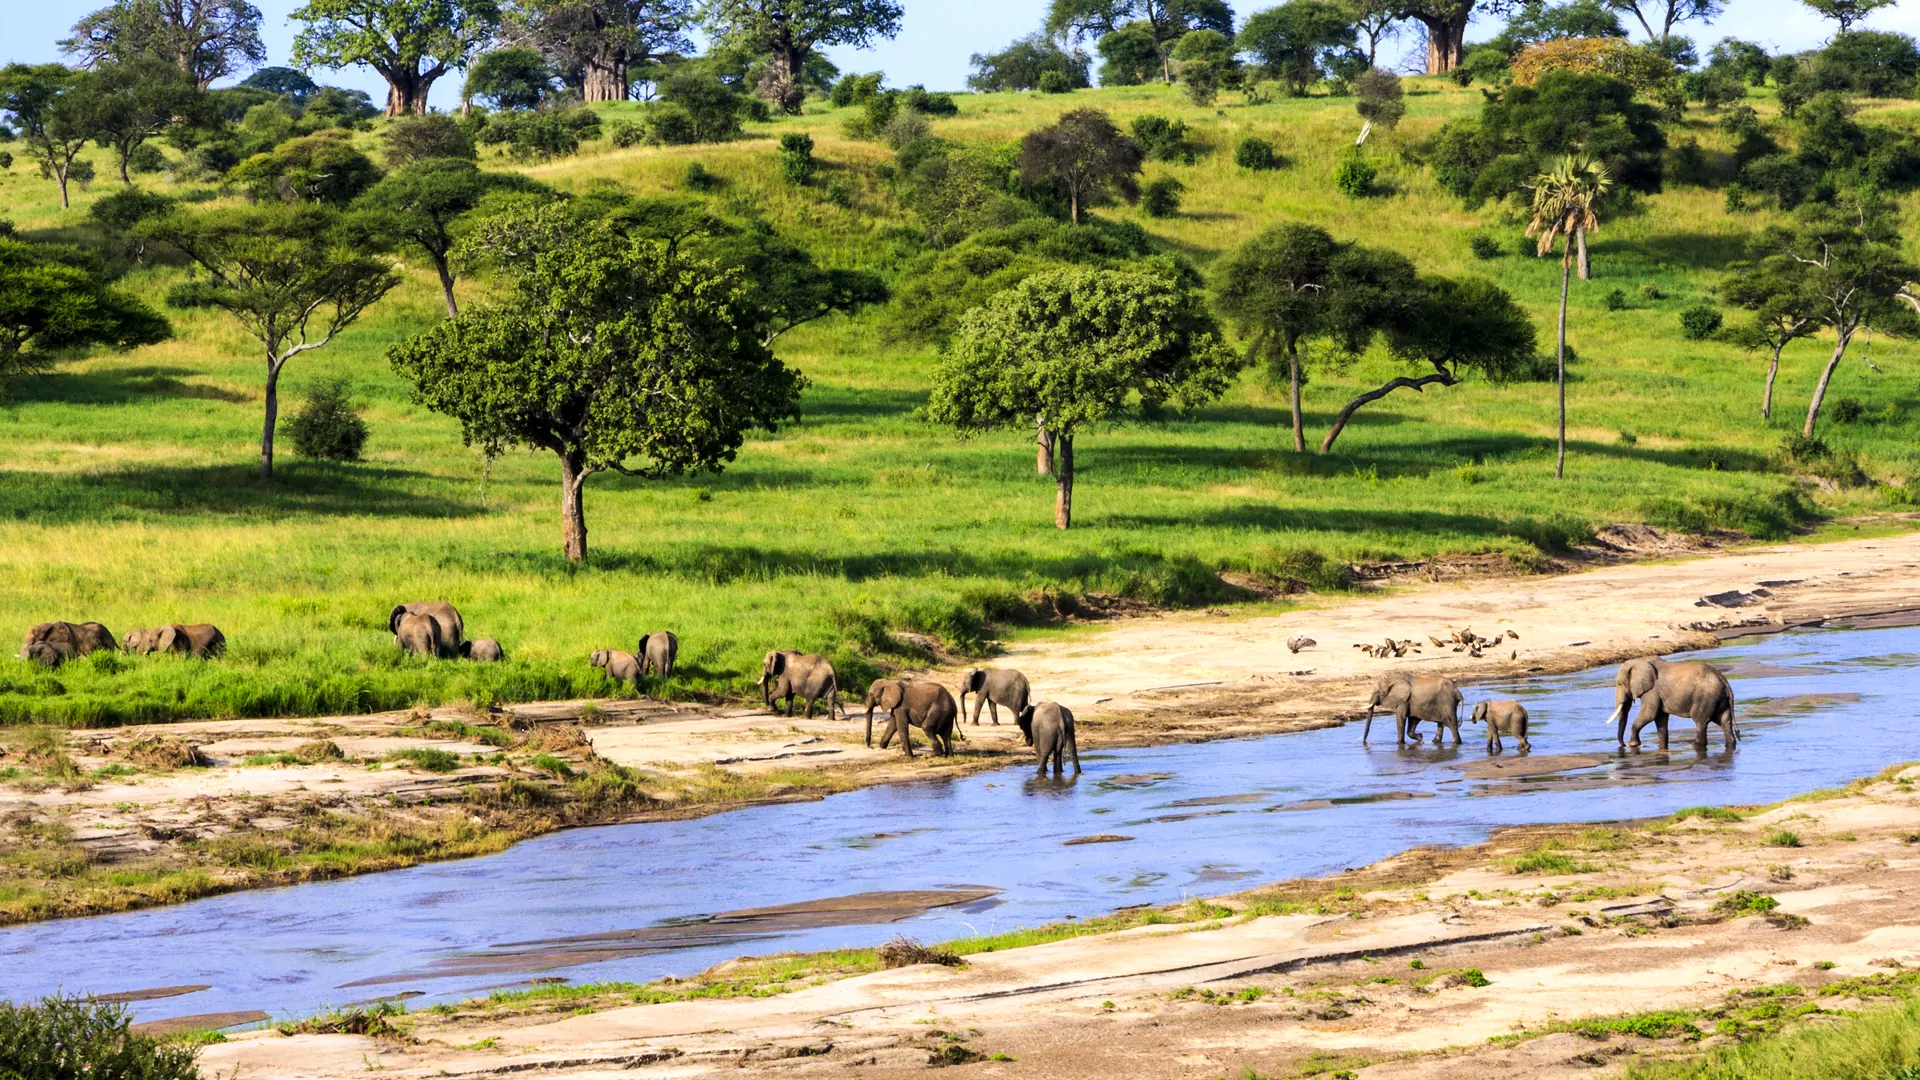 shutterstock_379974949 Elephants crossing the river in Serengeti National Park, Tanzania, Africa.jpg